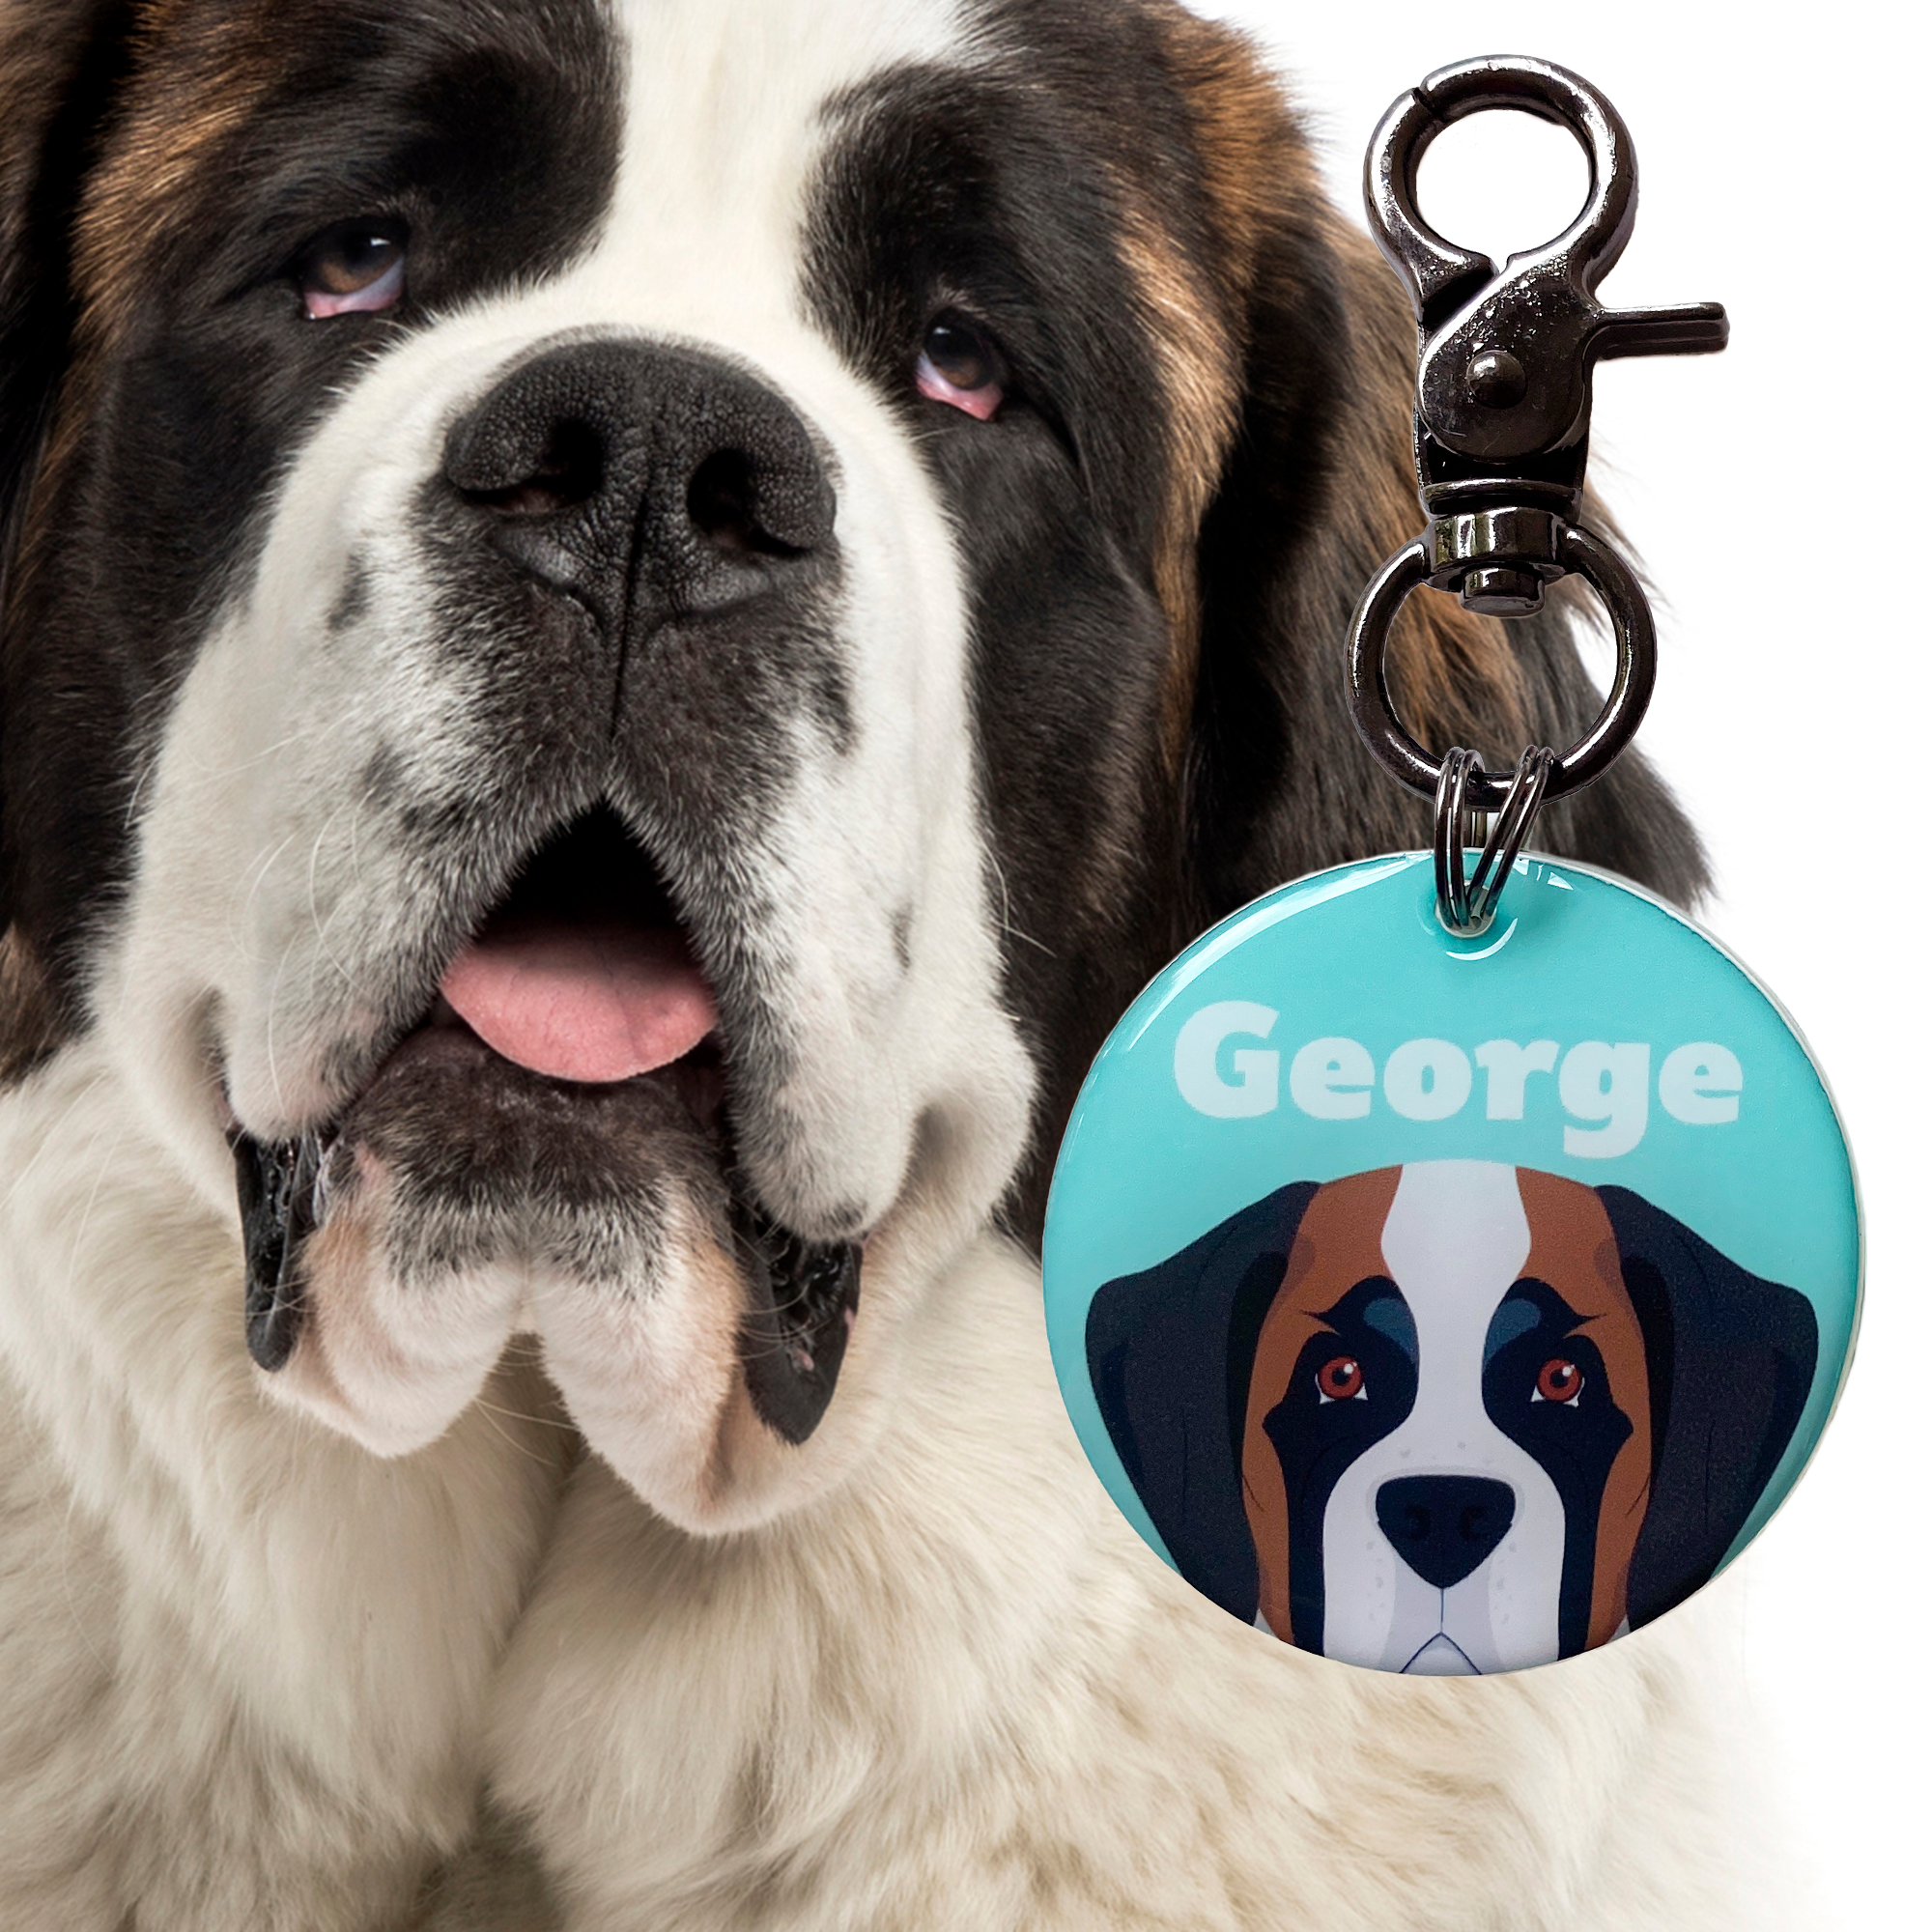 Saint Bernard Double-Sided Dog Tag | Unique Pet ID Tags by Bashtags®